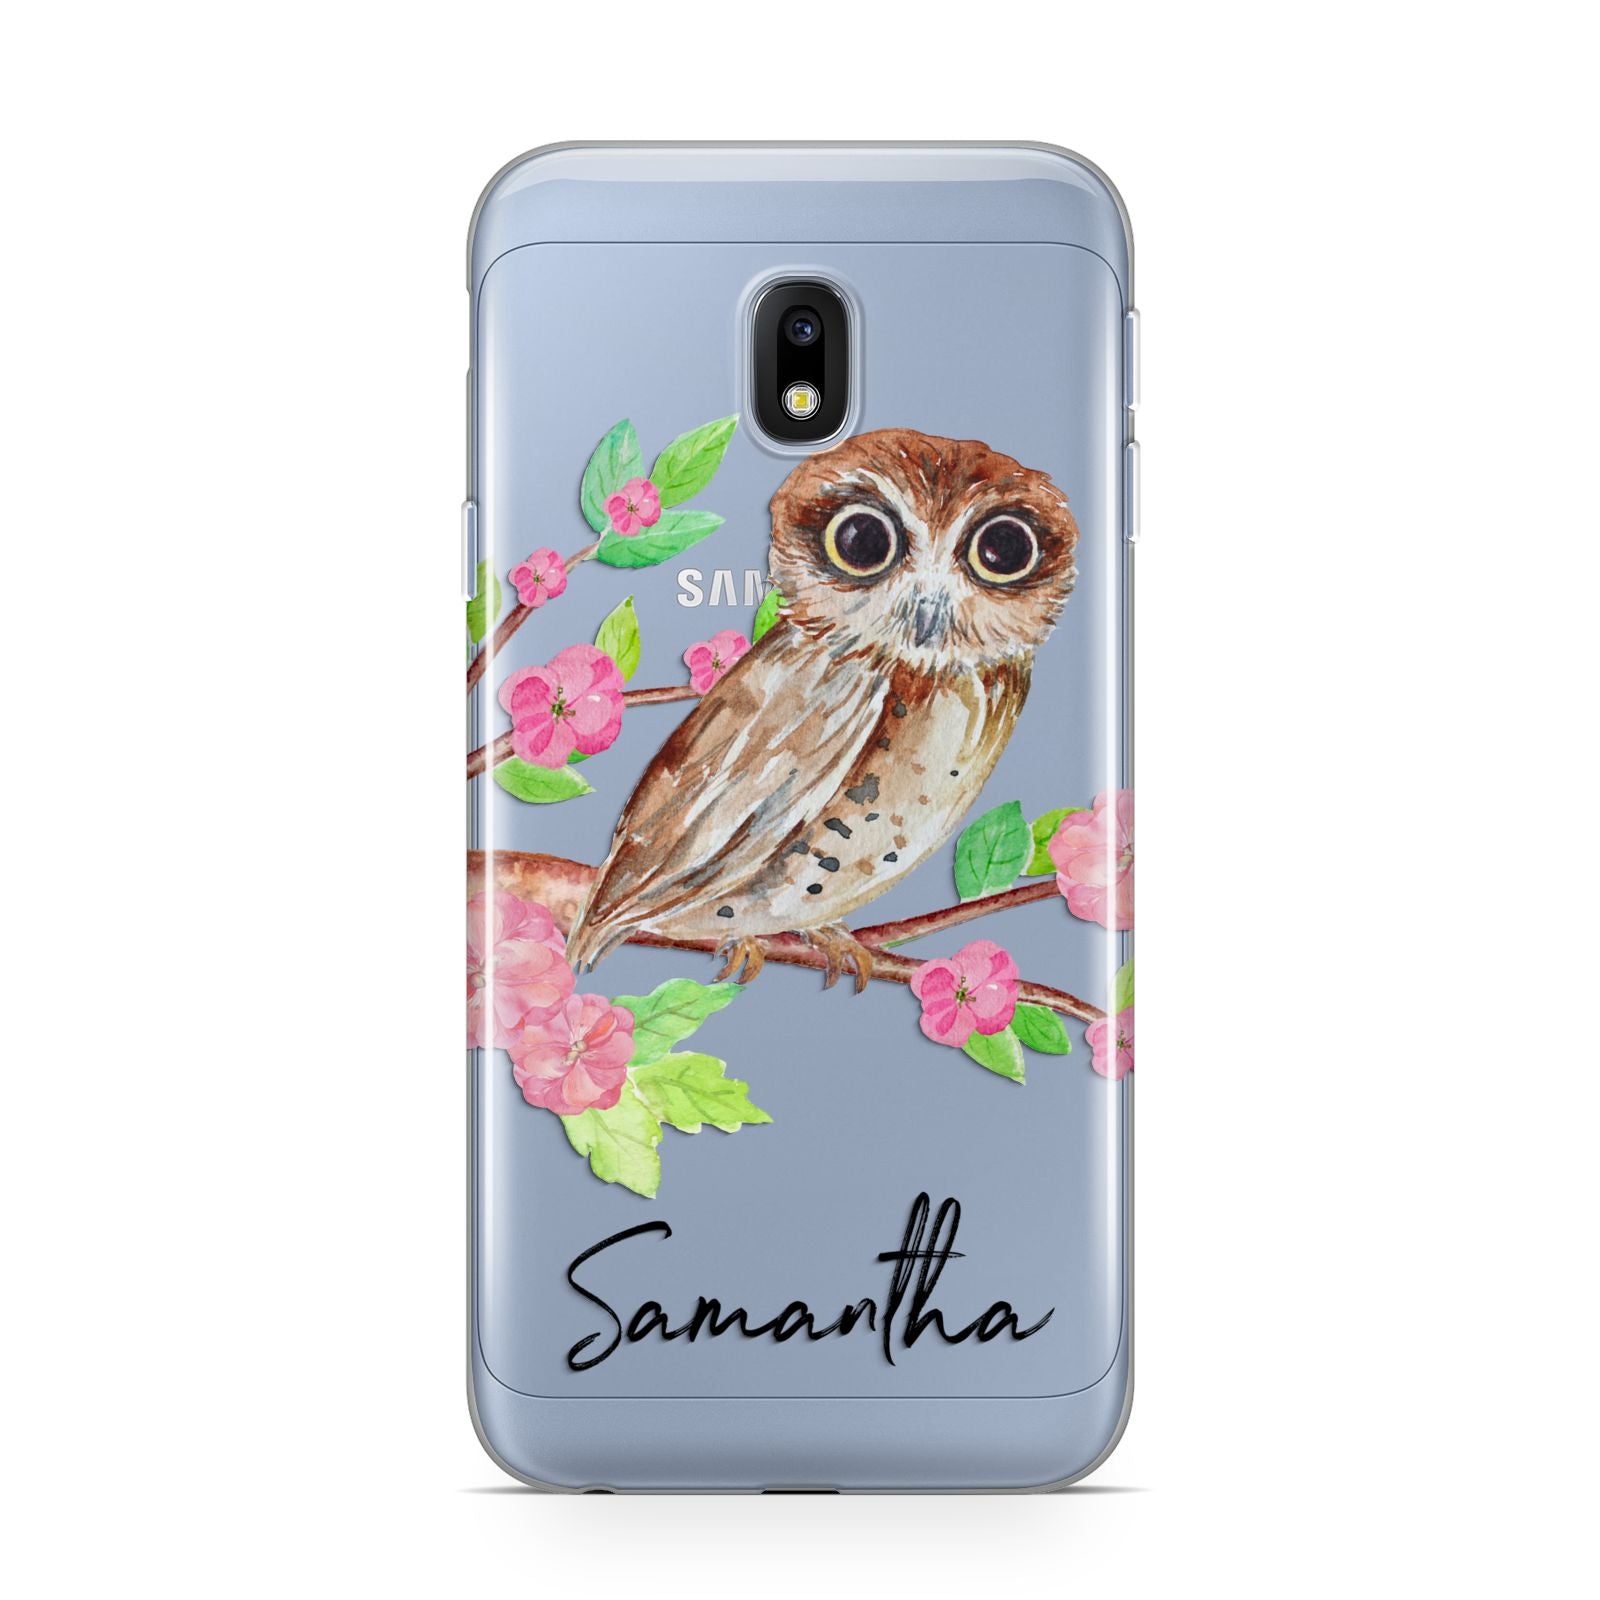 Personalised Owl Samsung Galaxy J3 2017 Case